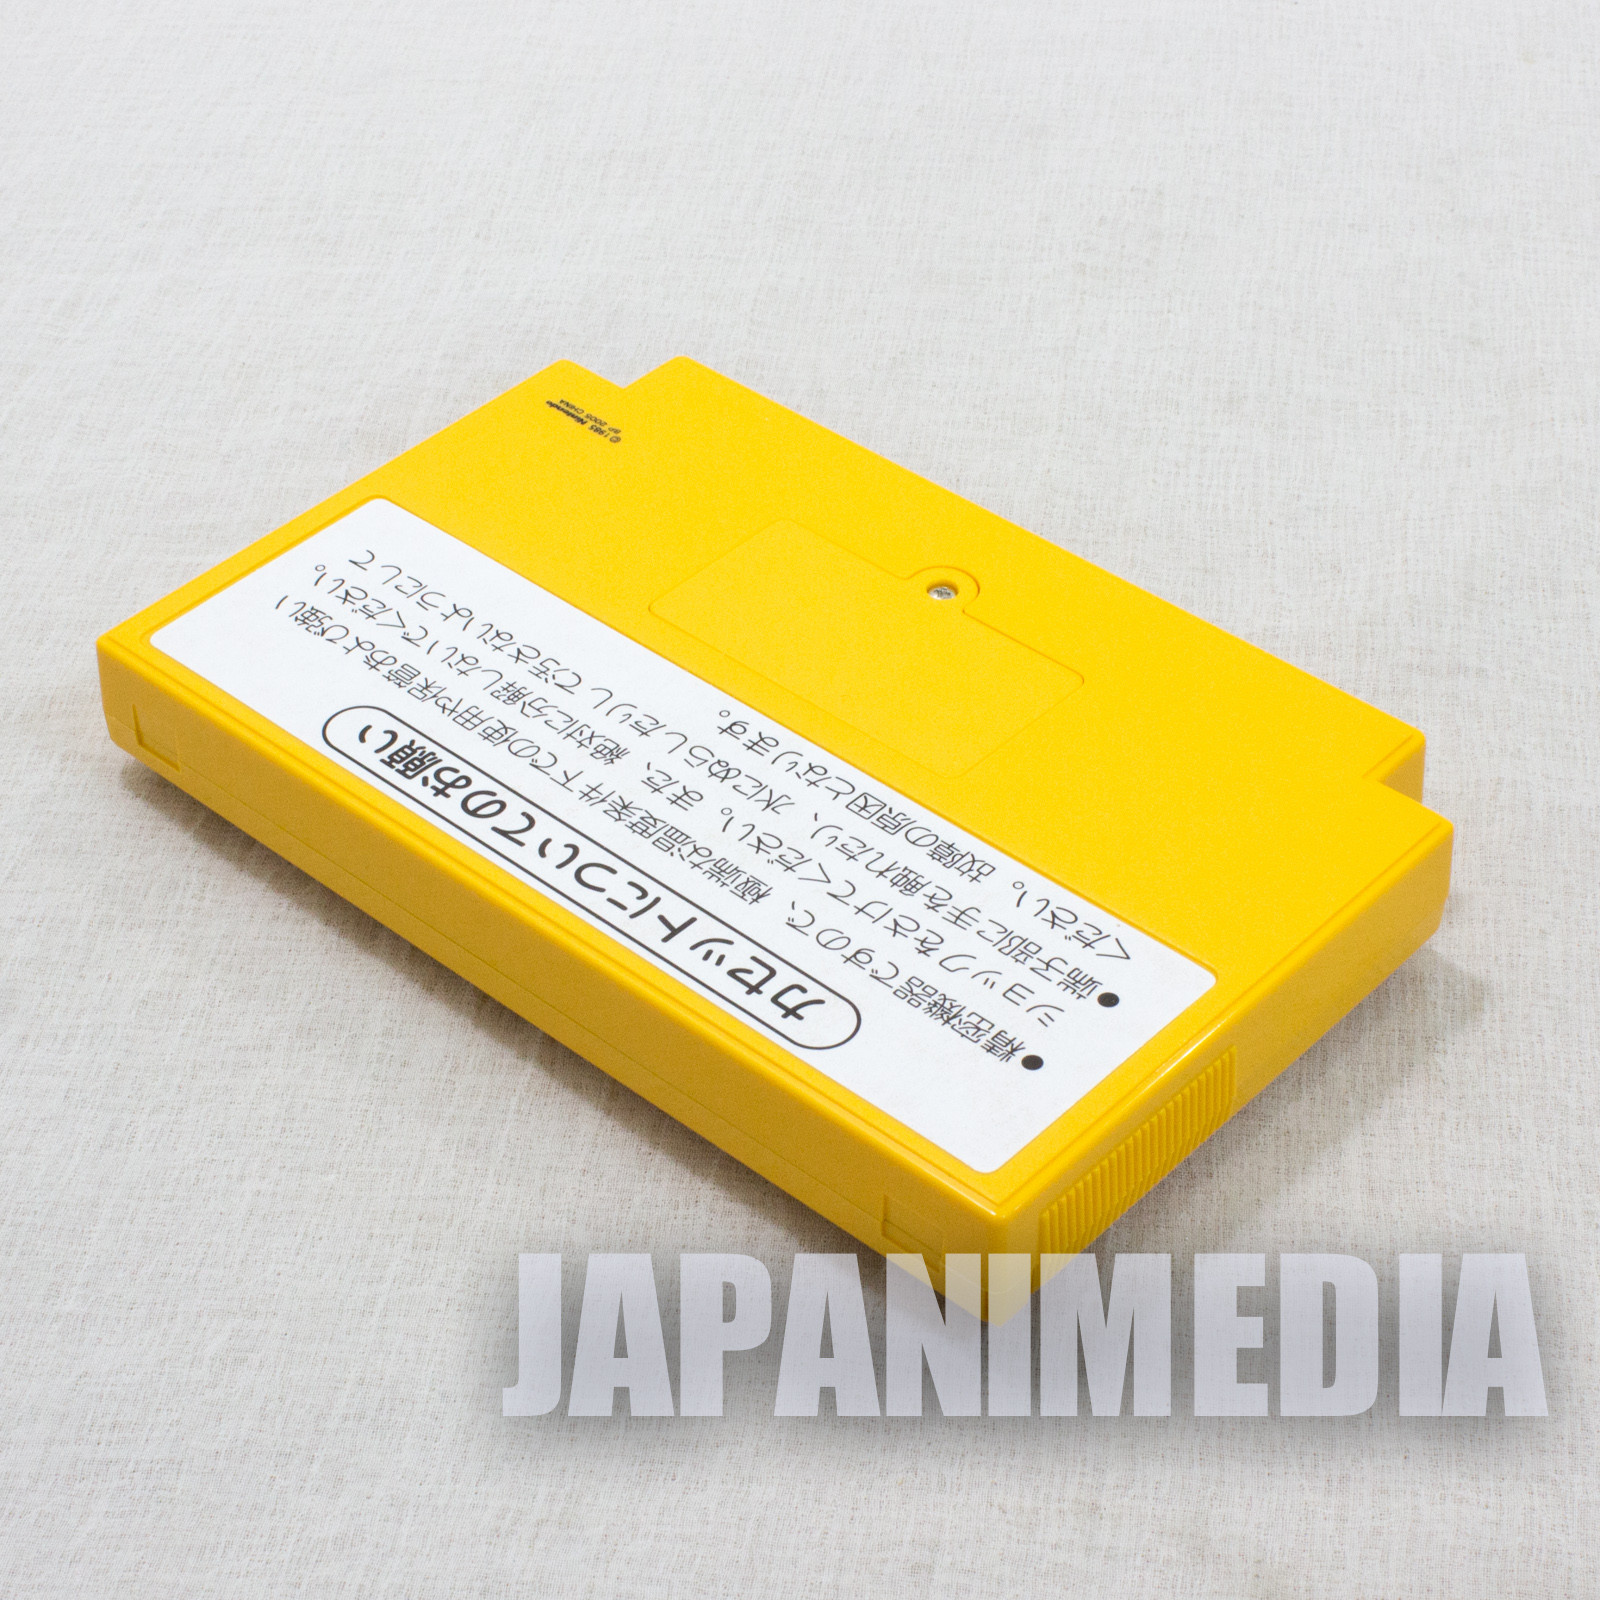 Nintendo NES Famicom Type Sound Calculator Super Mario Brothers JAPAN GAME